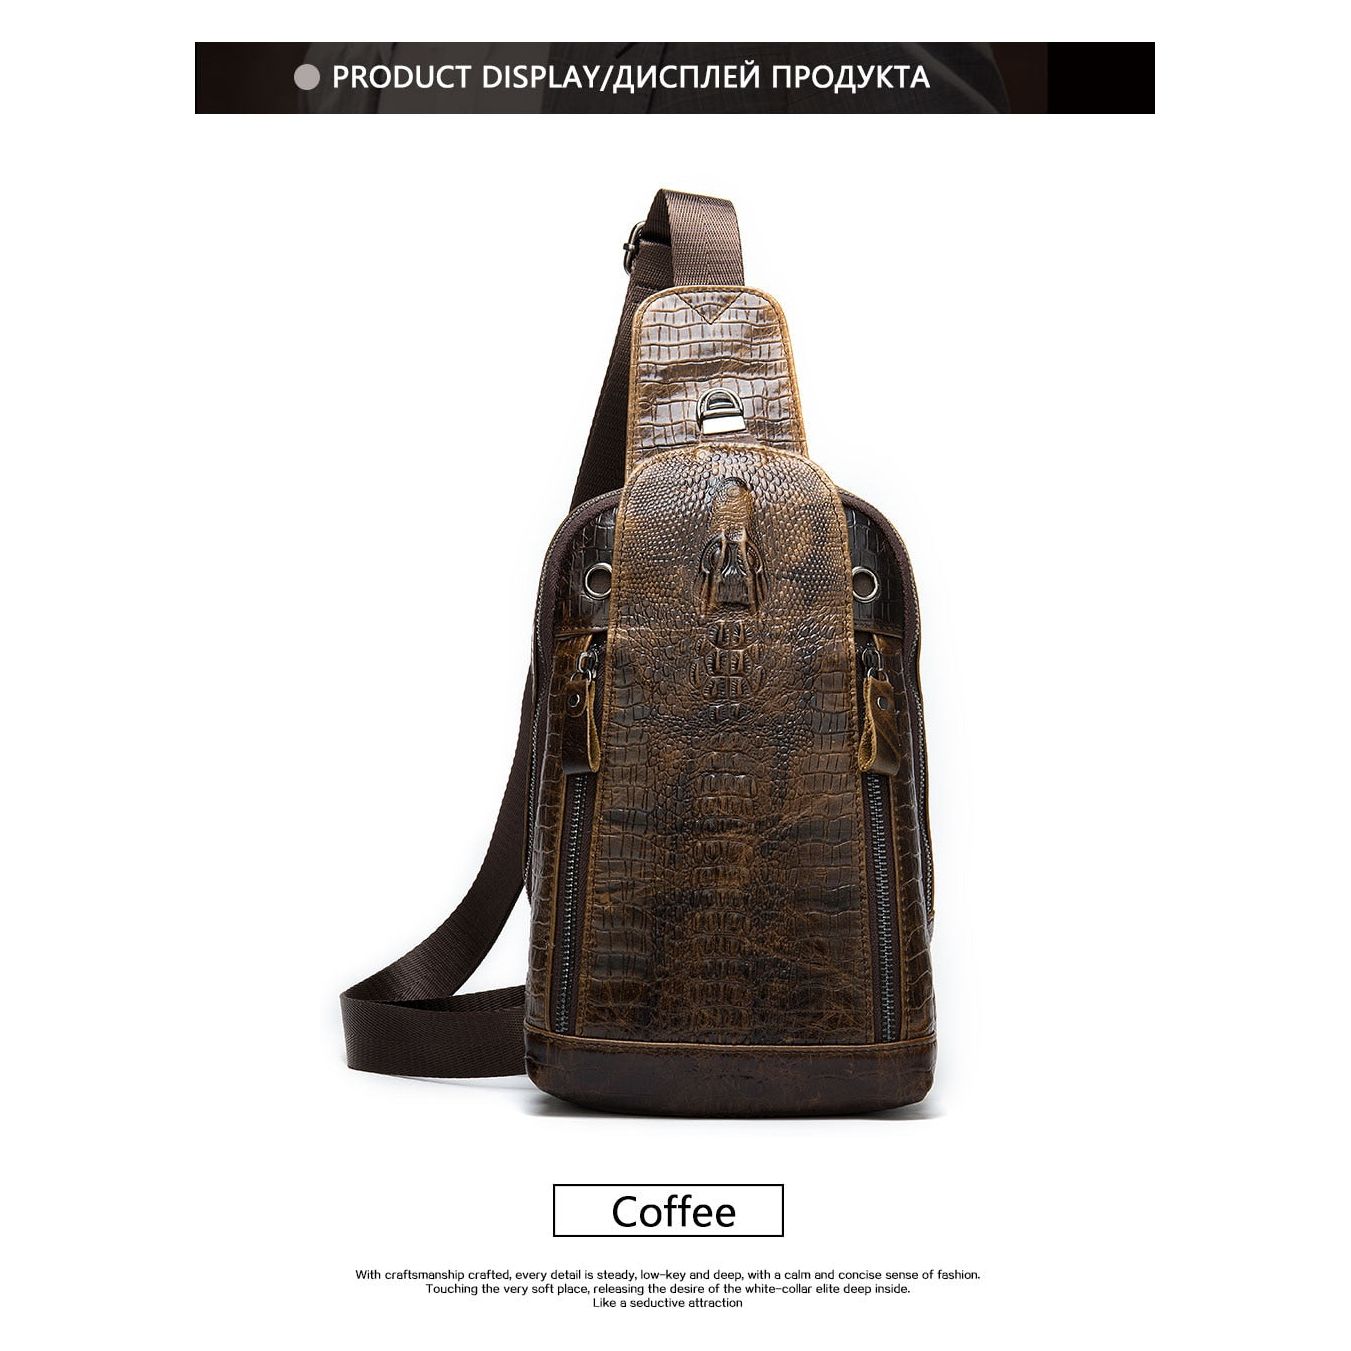 www. - Black Genuine Leather Clutch bag Crocodile Rivet purse  also in Metallic Gold white